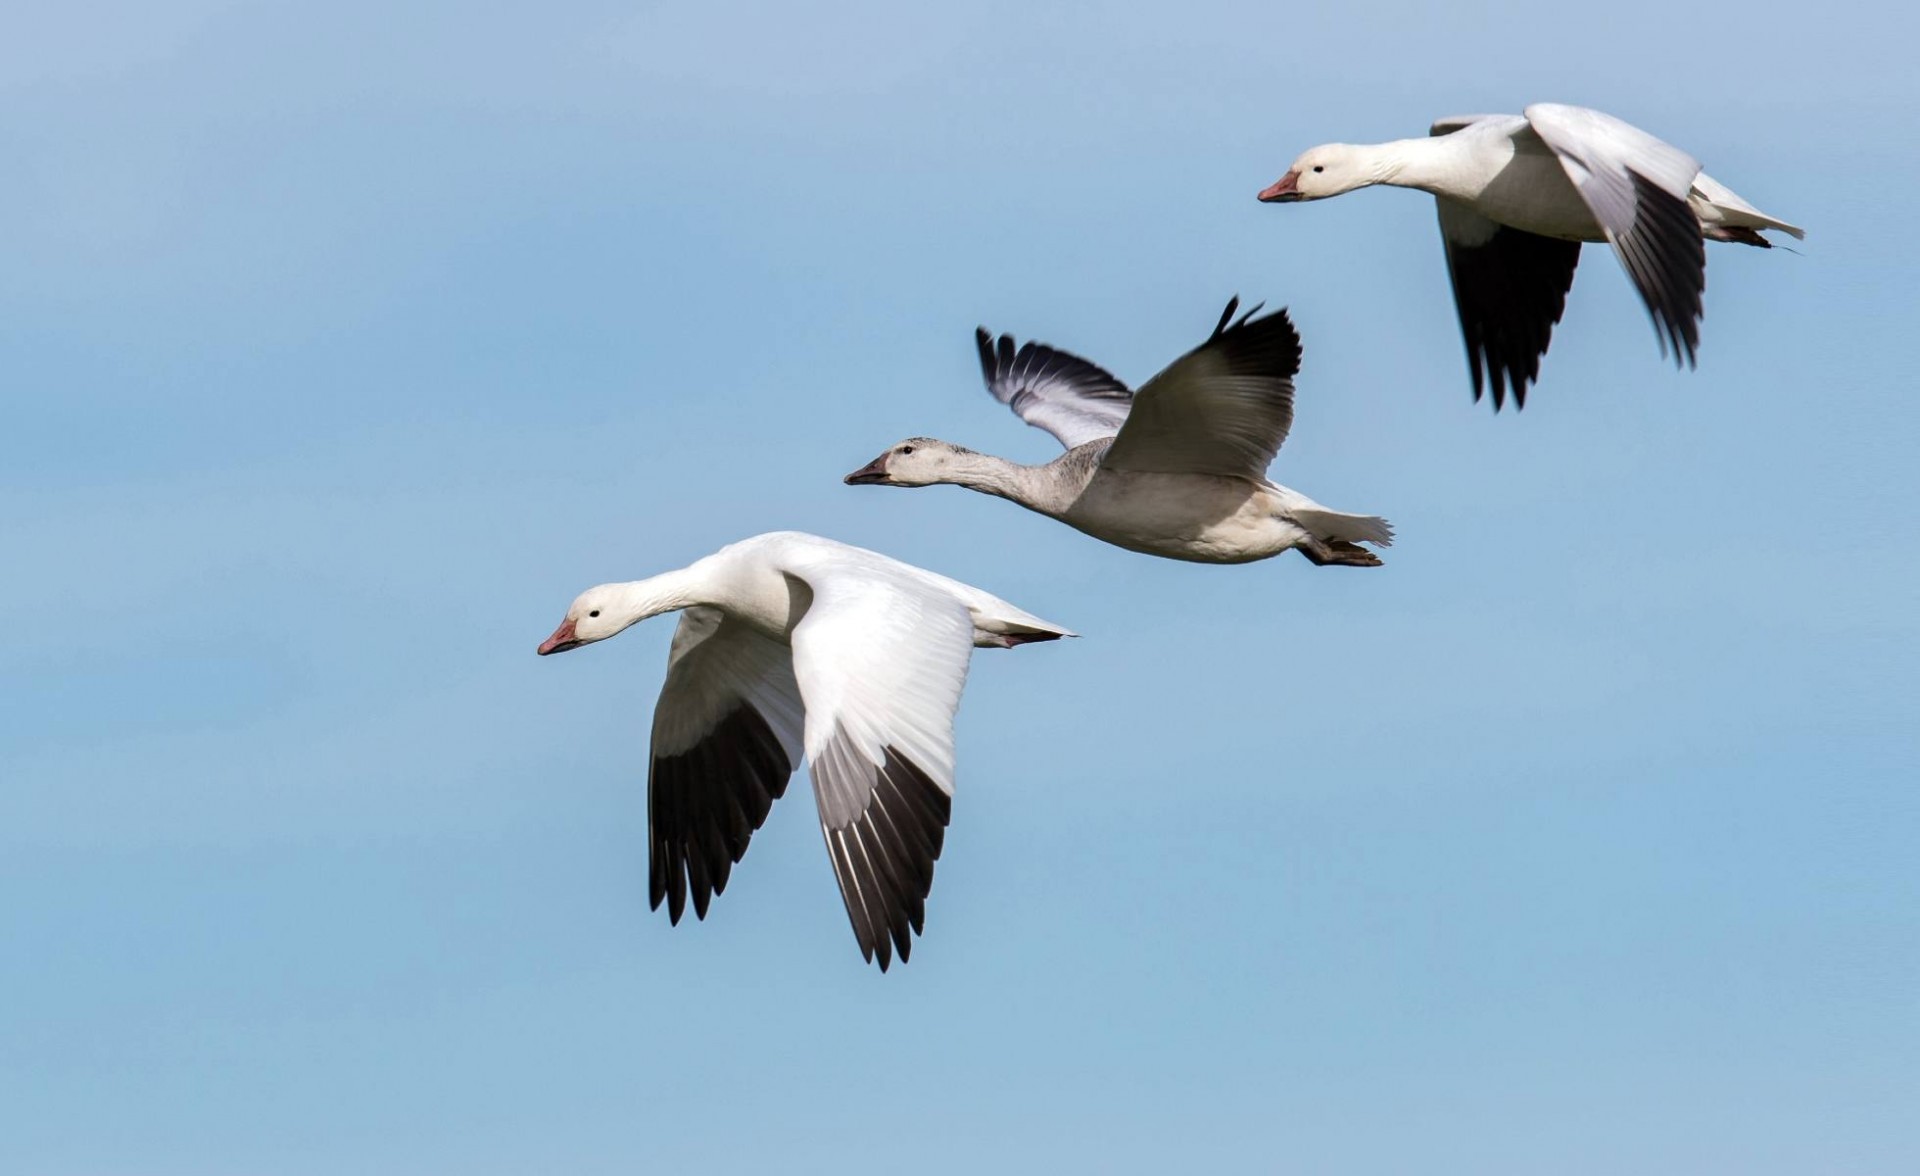 Three snow geese in flight